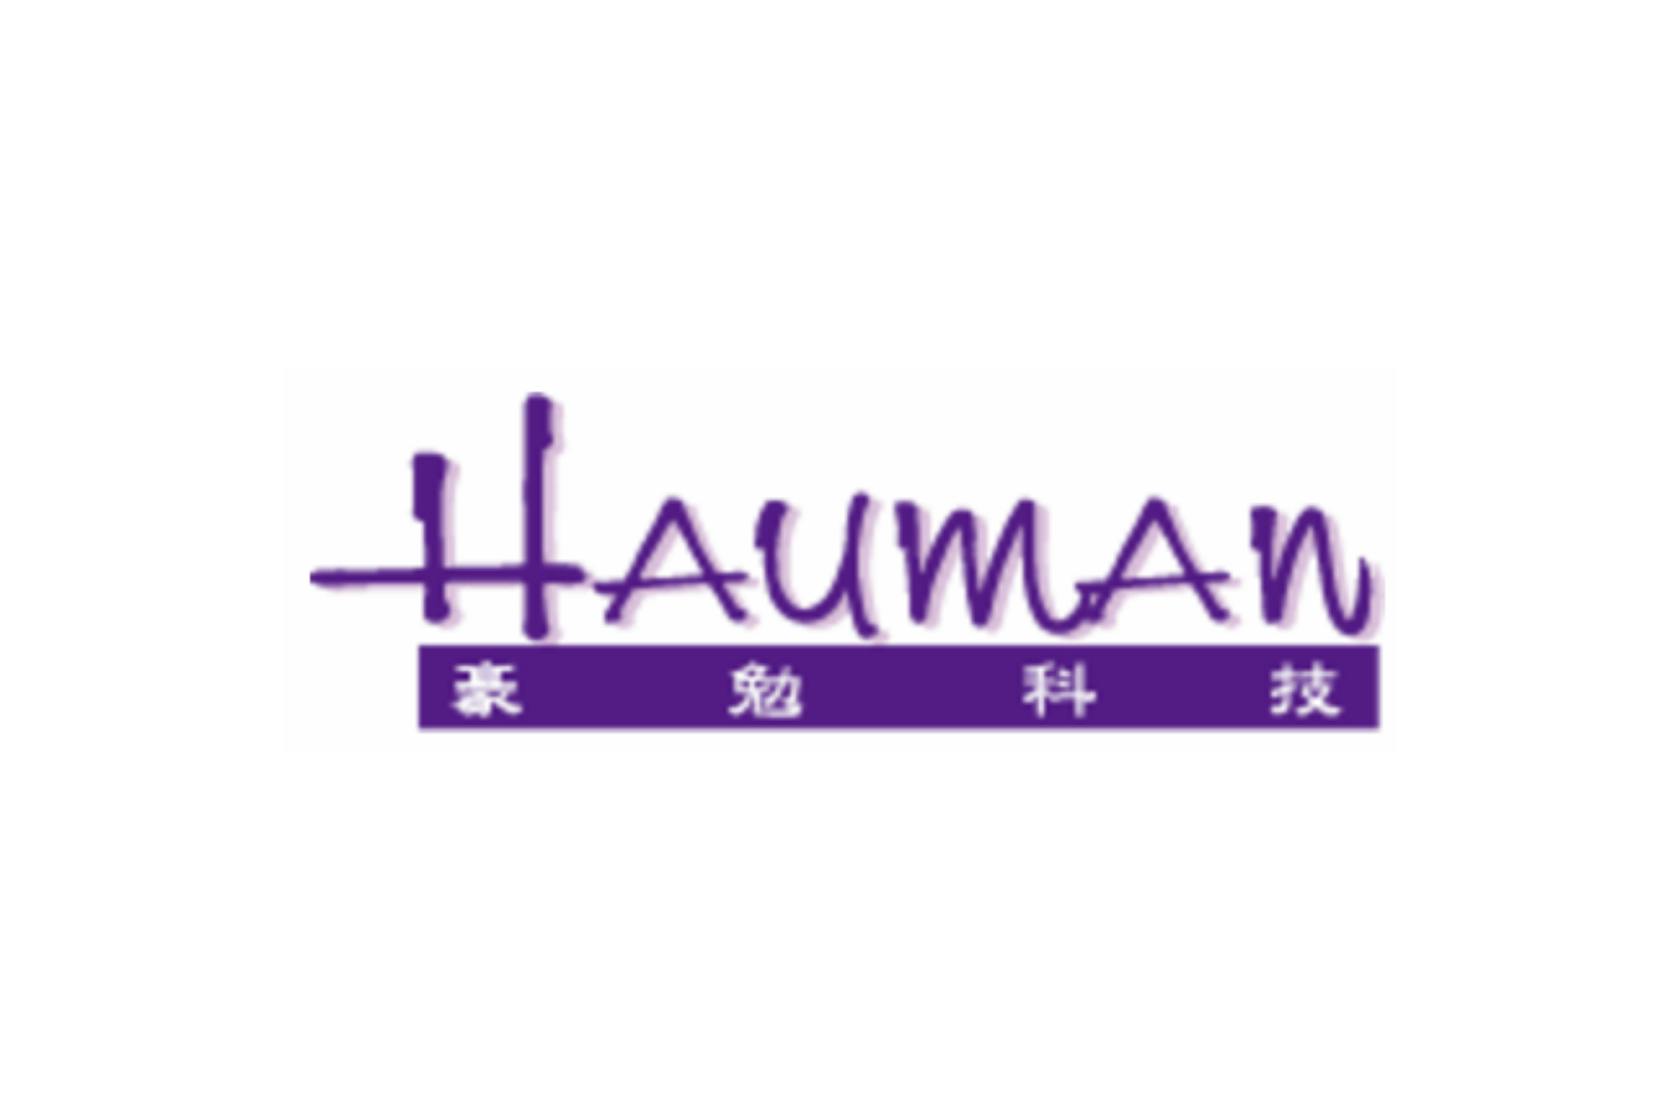 Hauman Technologies, Zhubei City